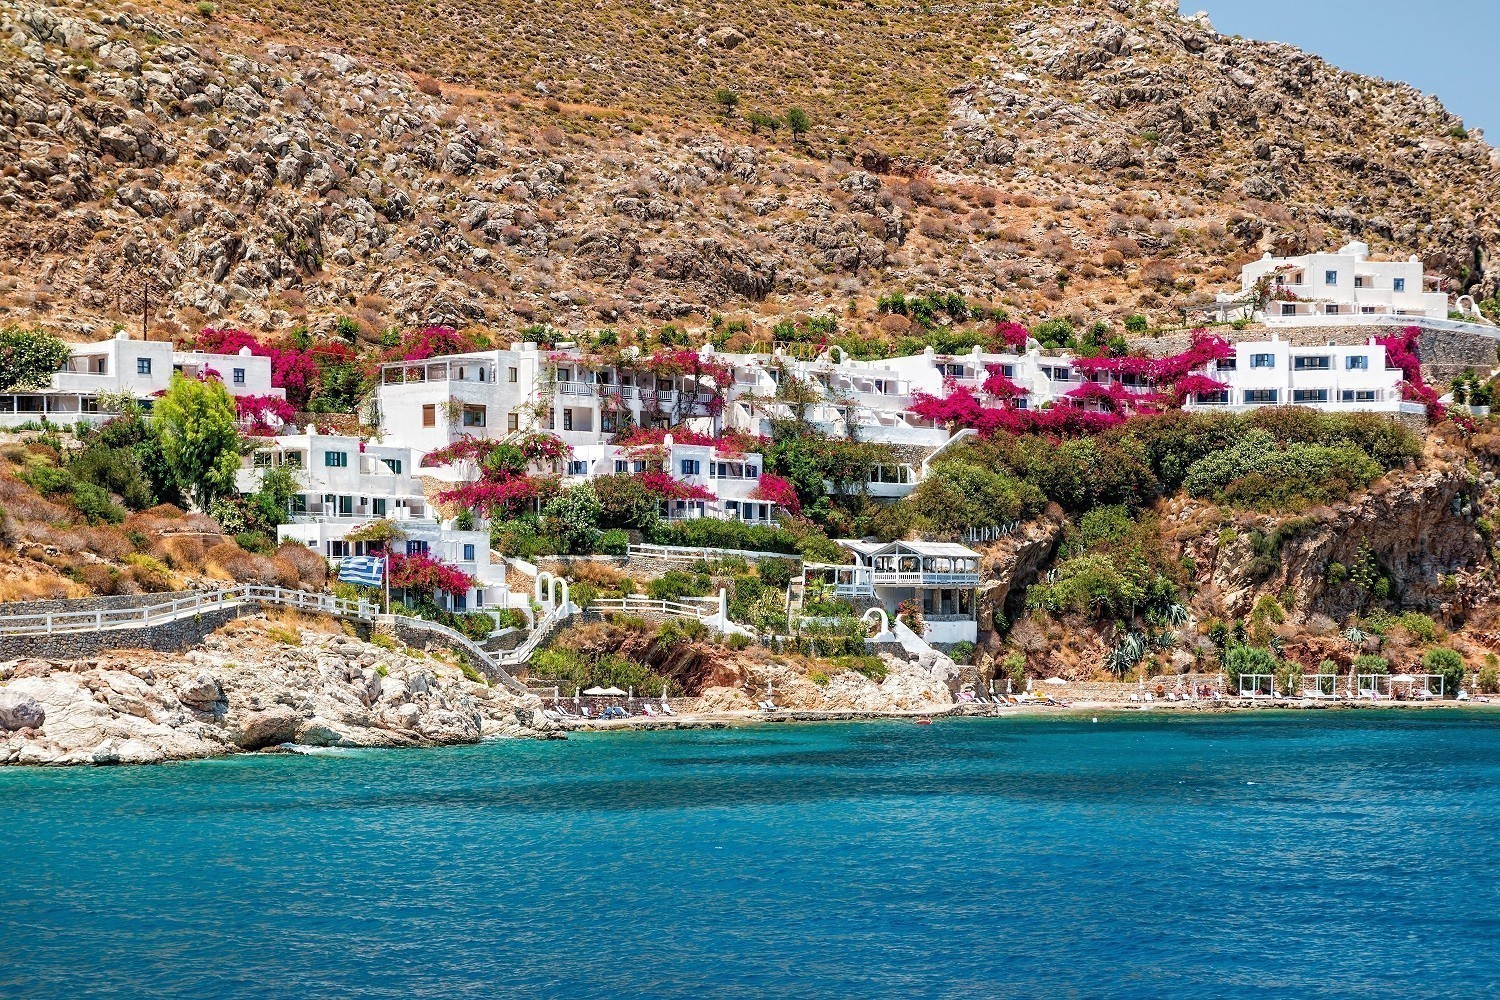 GR-eco Islands: Τα μικρά ελληνικά νησιά πρότυπα πράσινης οικονομίας και ενεργειακής αυτάρκειας